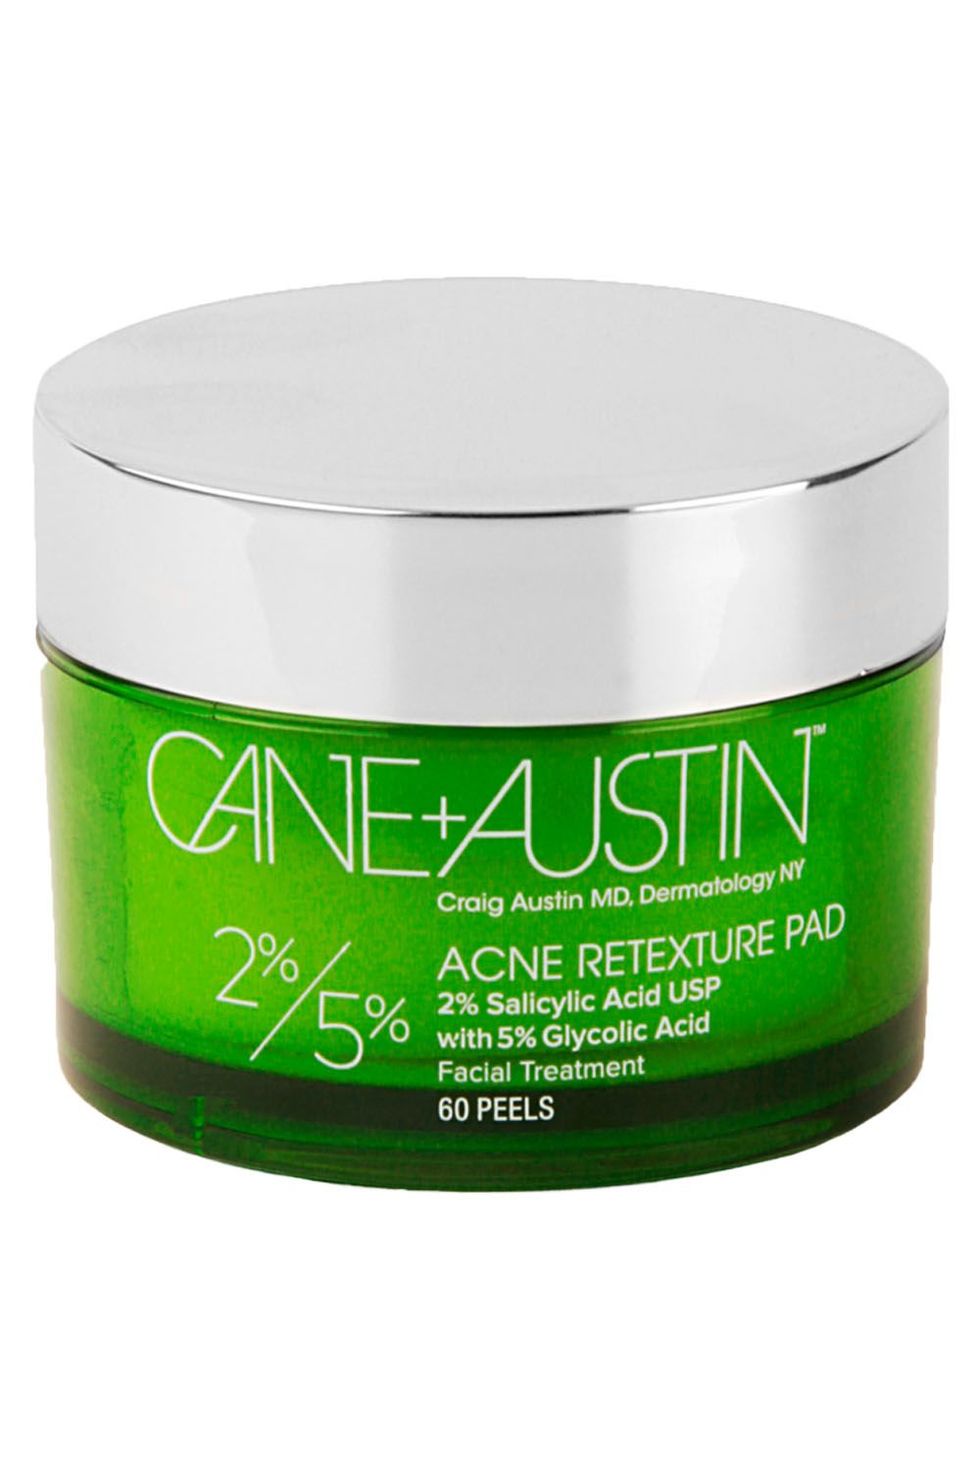 Cane + Austin Acne Retexture Pad